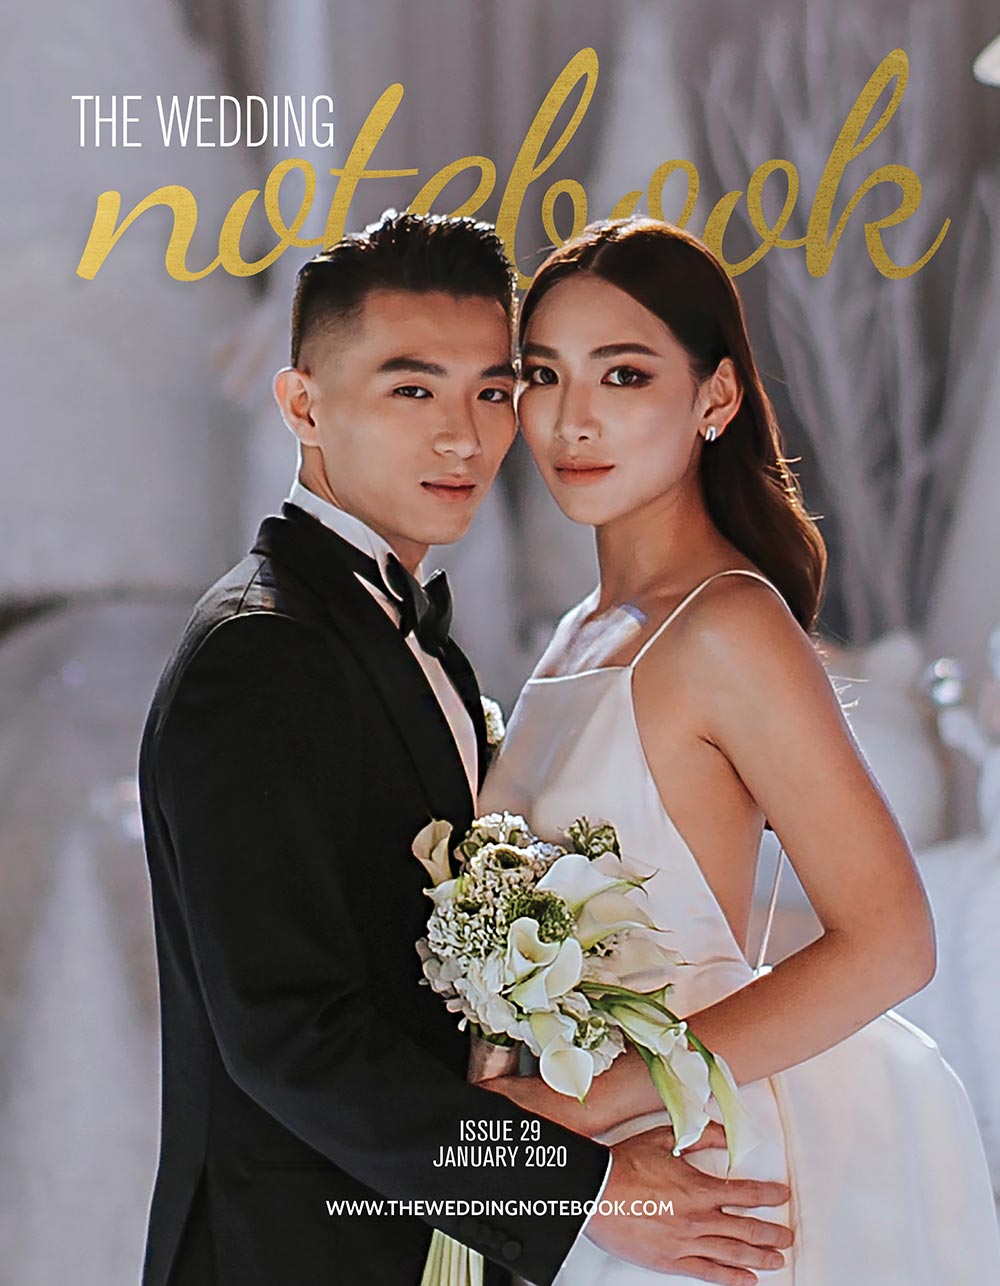 The Wedding Notebook magazine issue 29